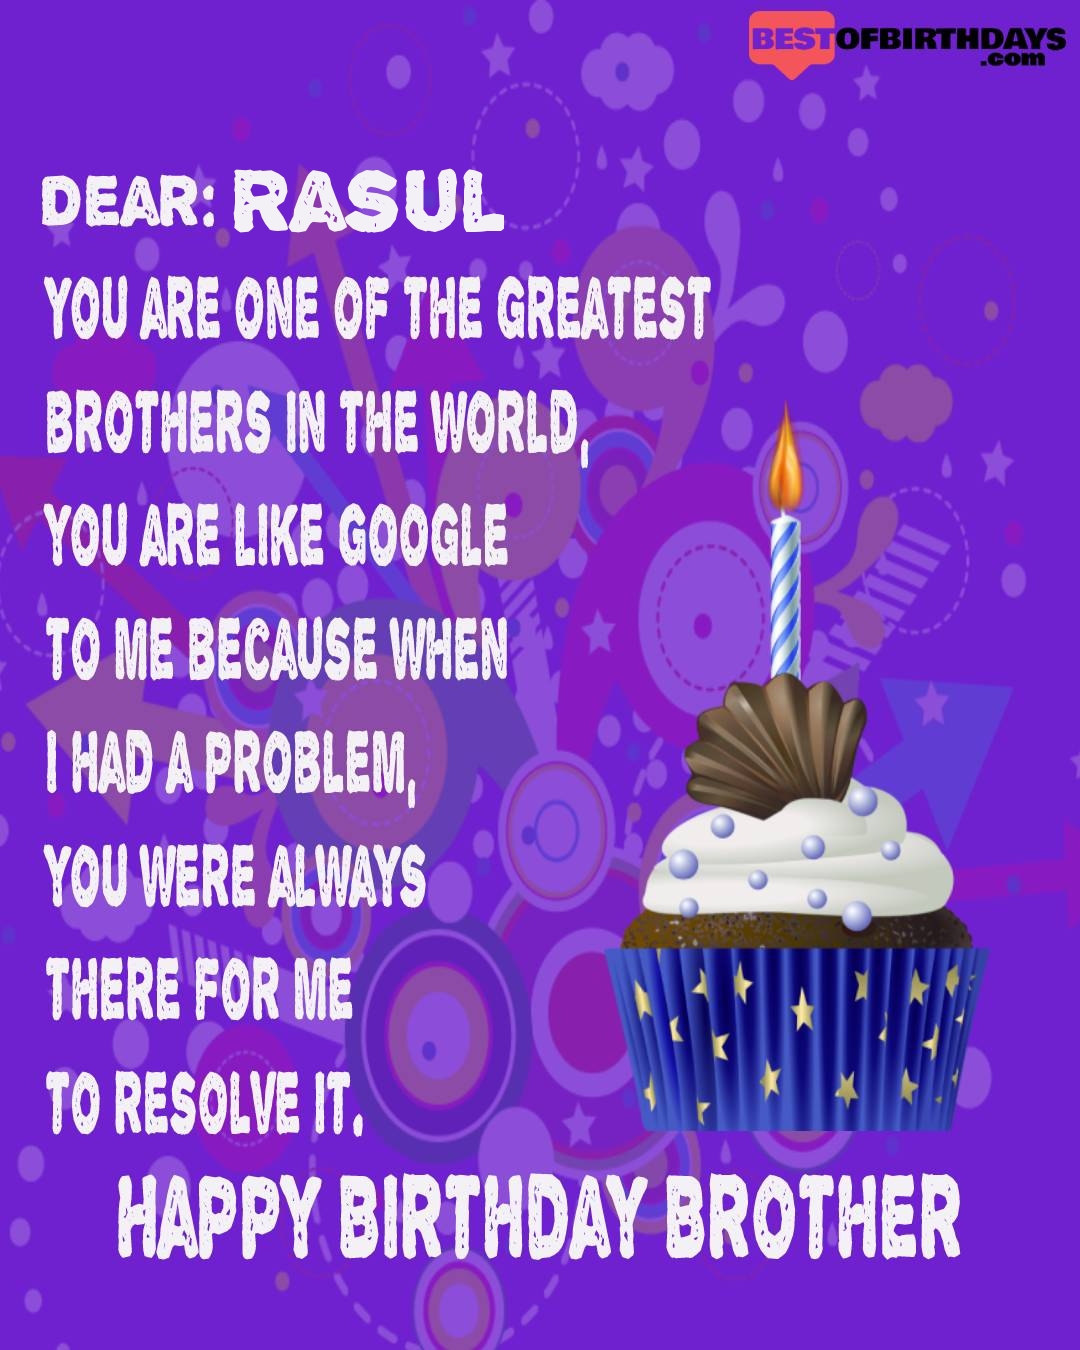 Happy birthday rasul bhai brother bro